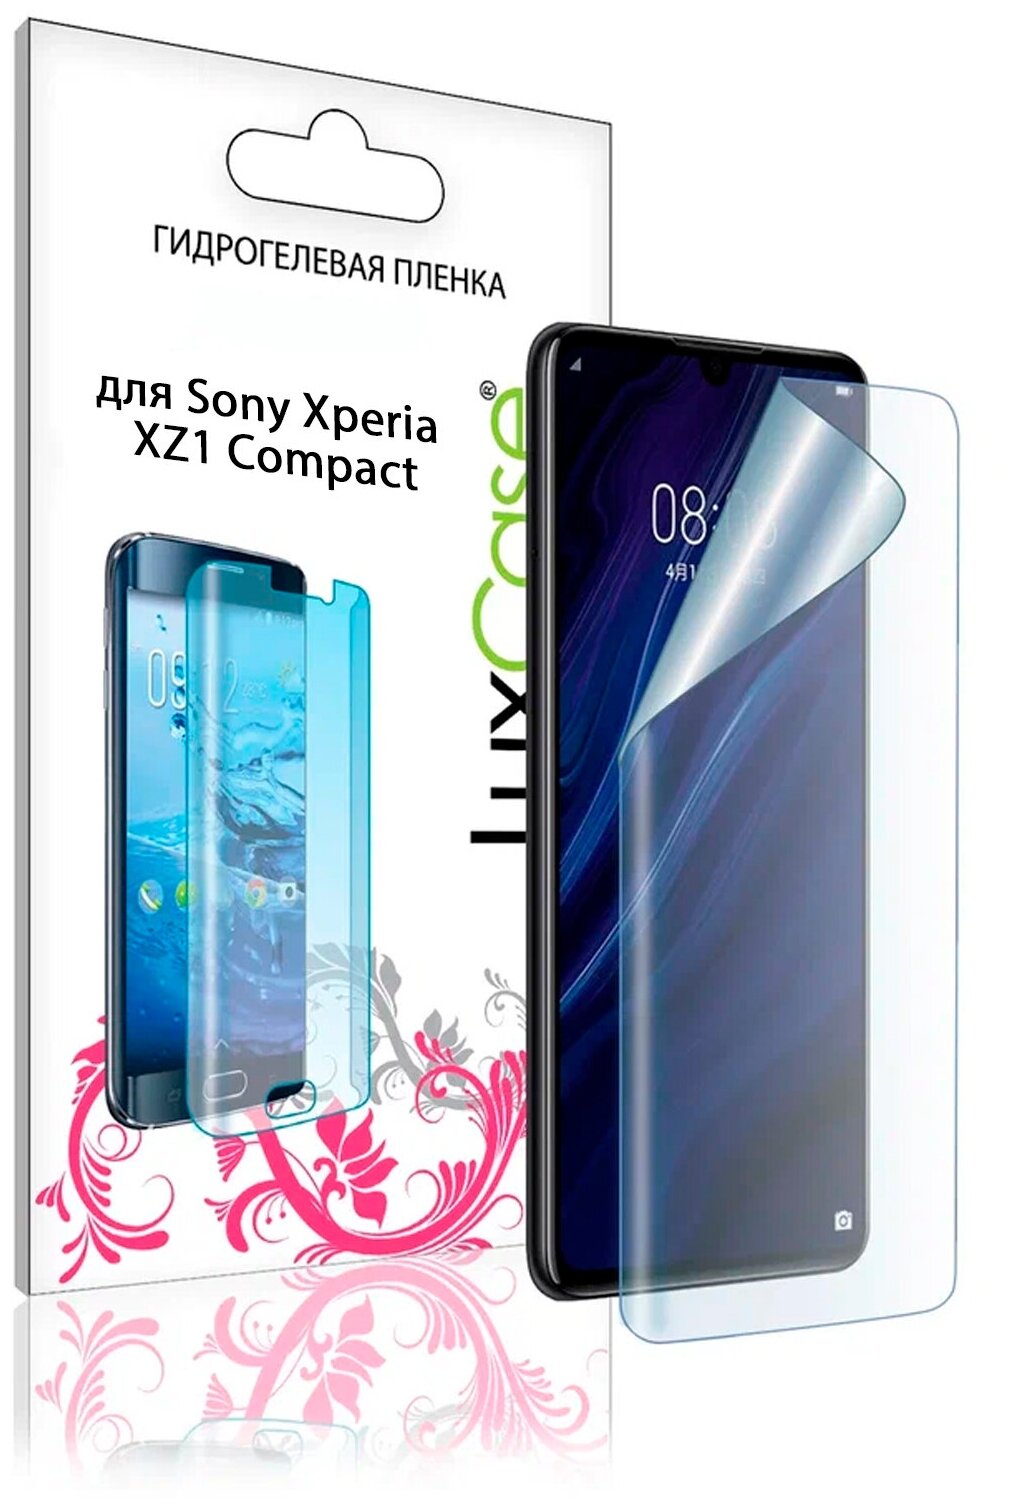 Защитная глянцевая гидрогелевая бронепленка LuxCase на экран Sony Xperia XZ1 Compact с олеофобным покрытием